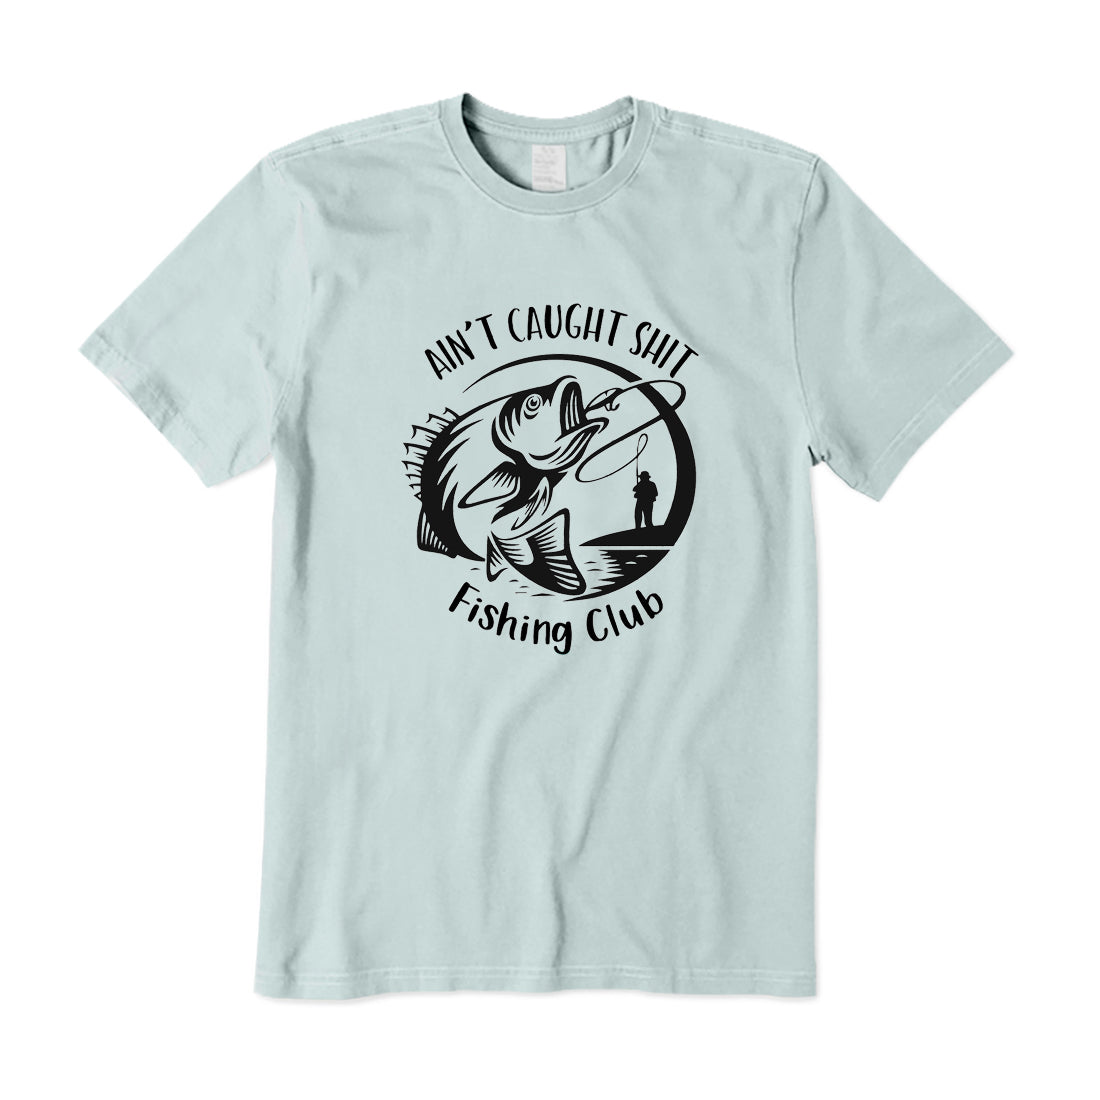 Ain't Caught Fishing Club T-Shirt